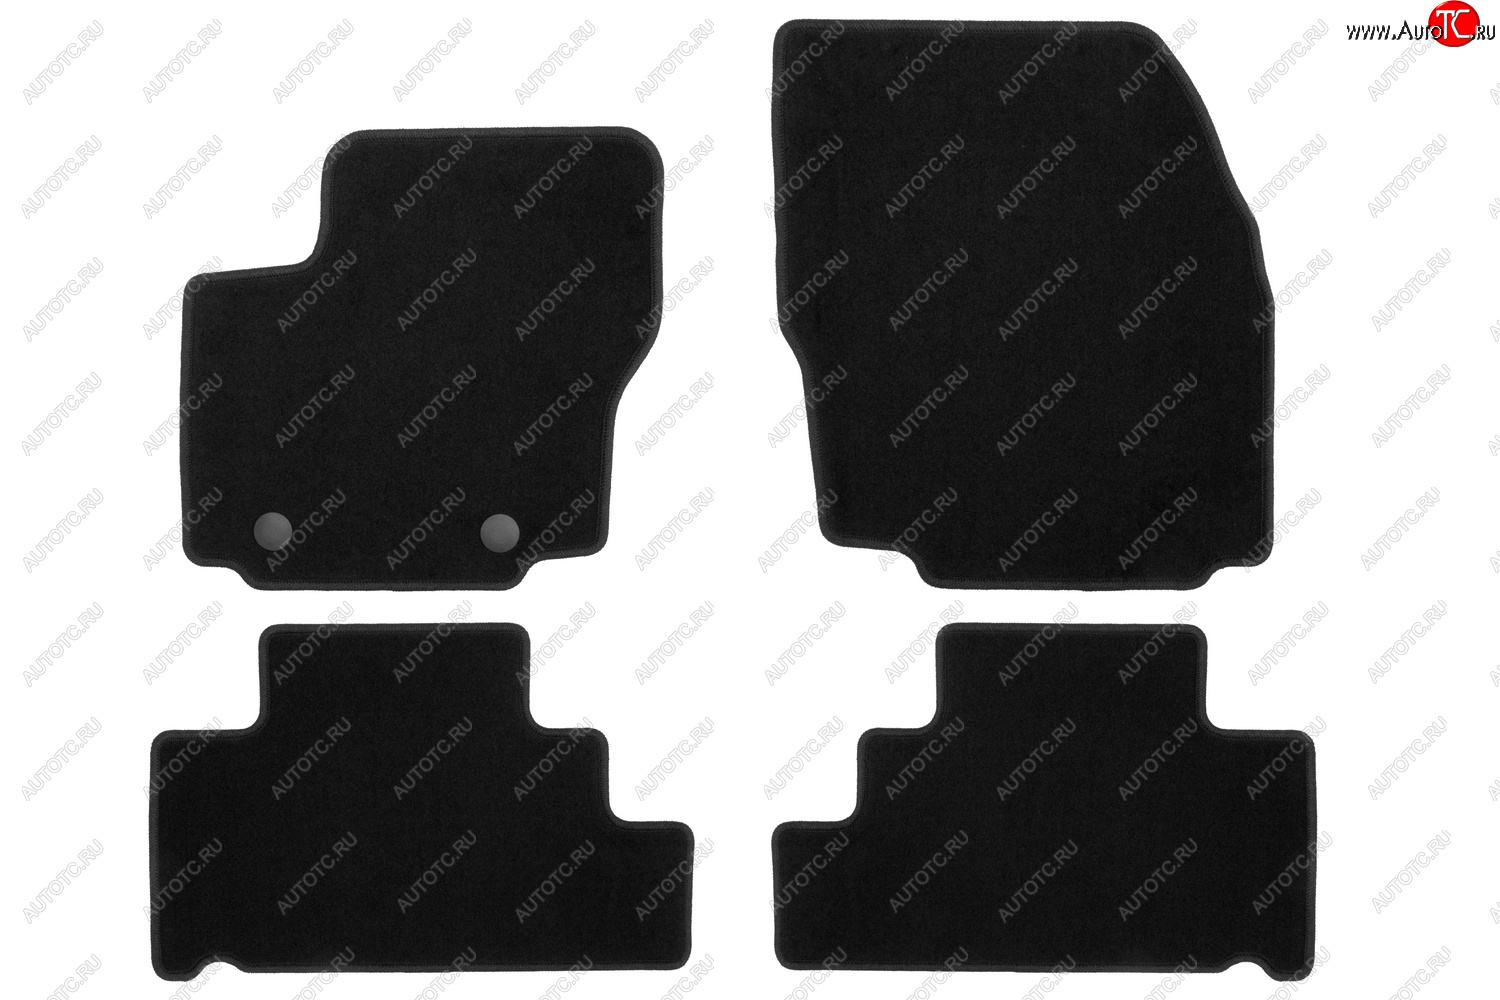 3 099 р. Коврики салона (текстиль) Klever Econom  Ford S-Max  1 (2006-2015) (Чёрные)